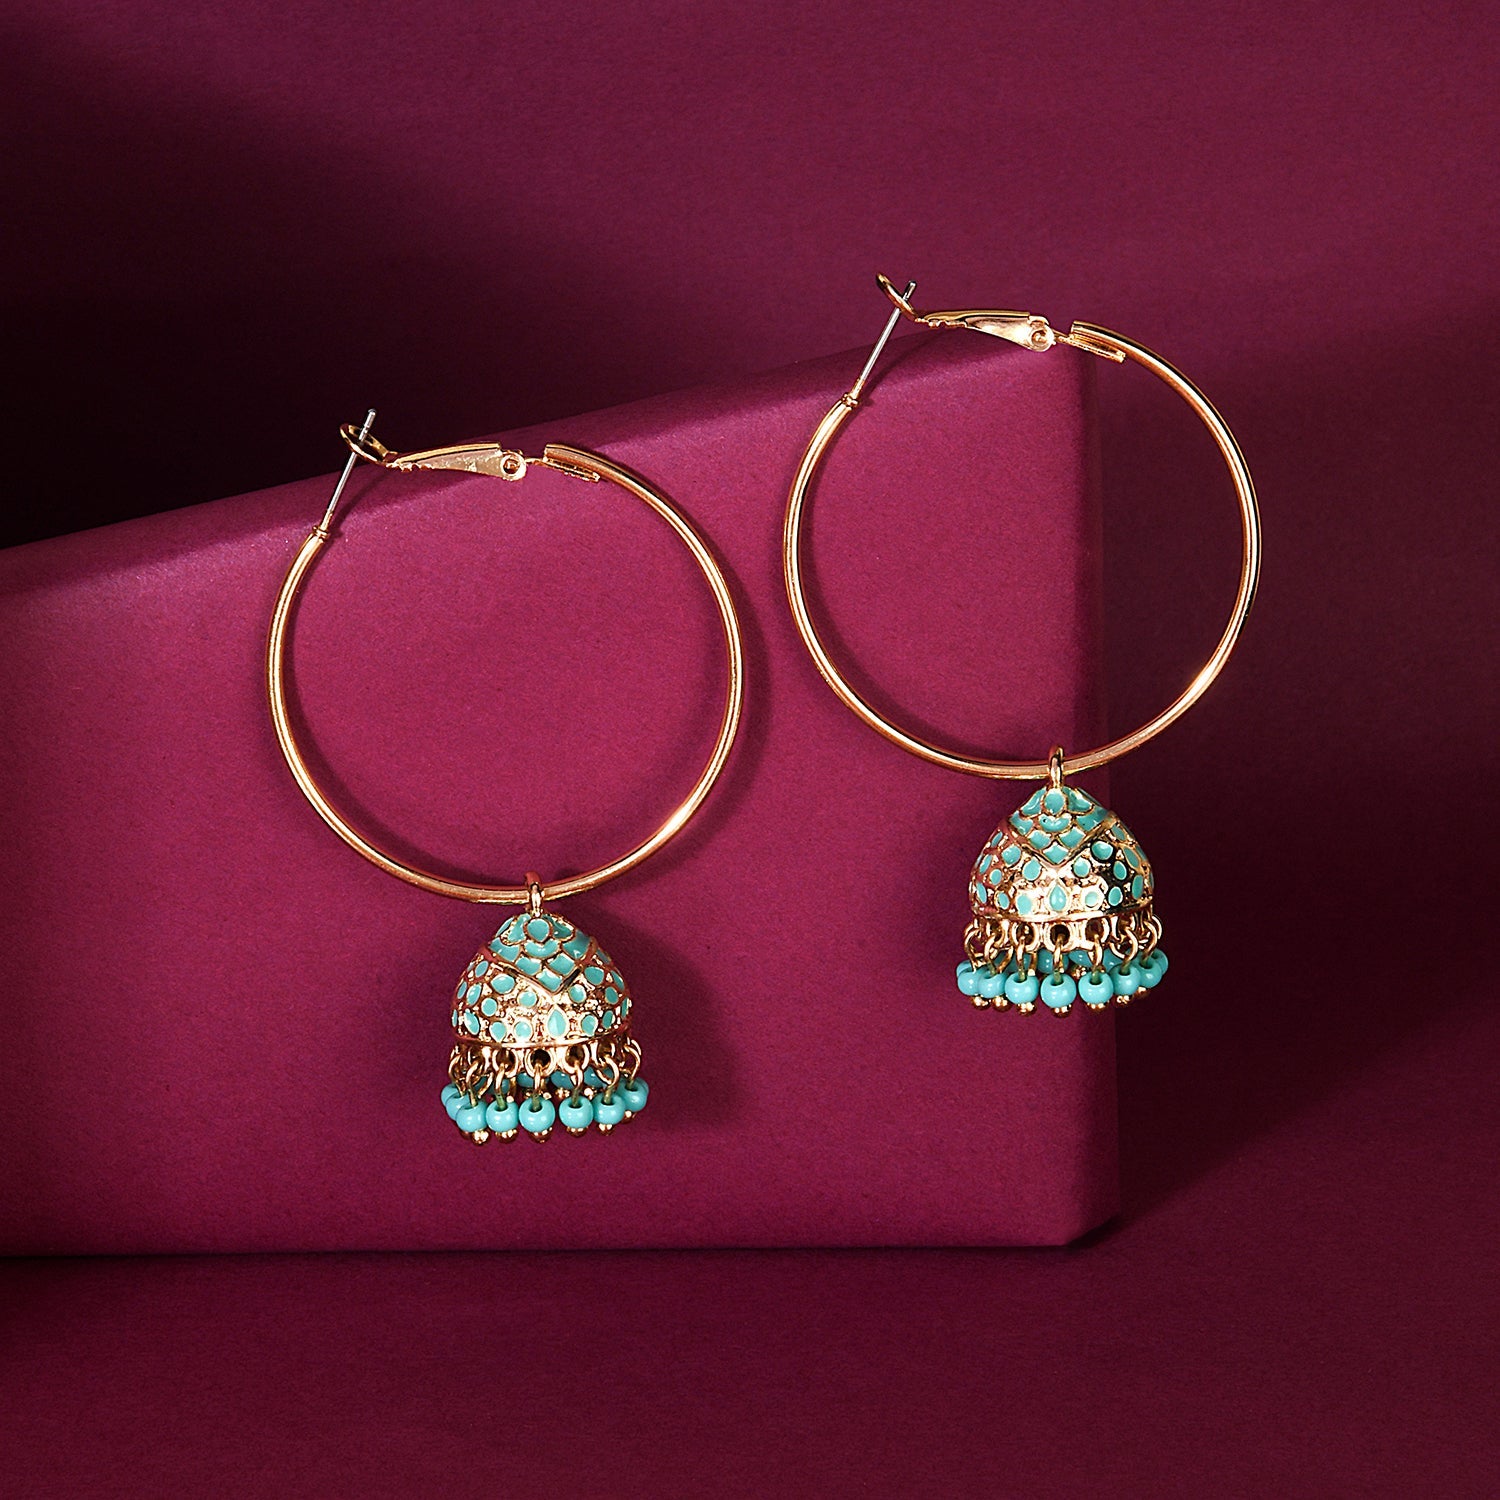 Accessorize London Women's Meenakari Teal Dome Jumka Earring